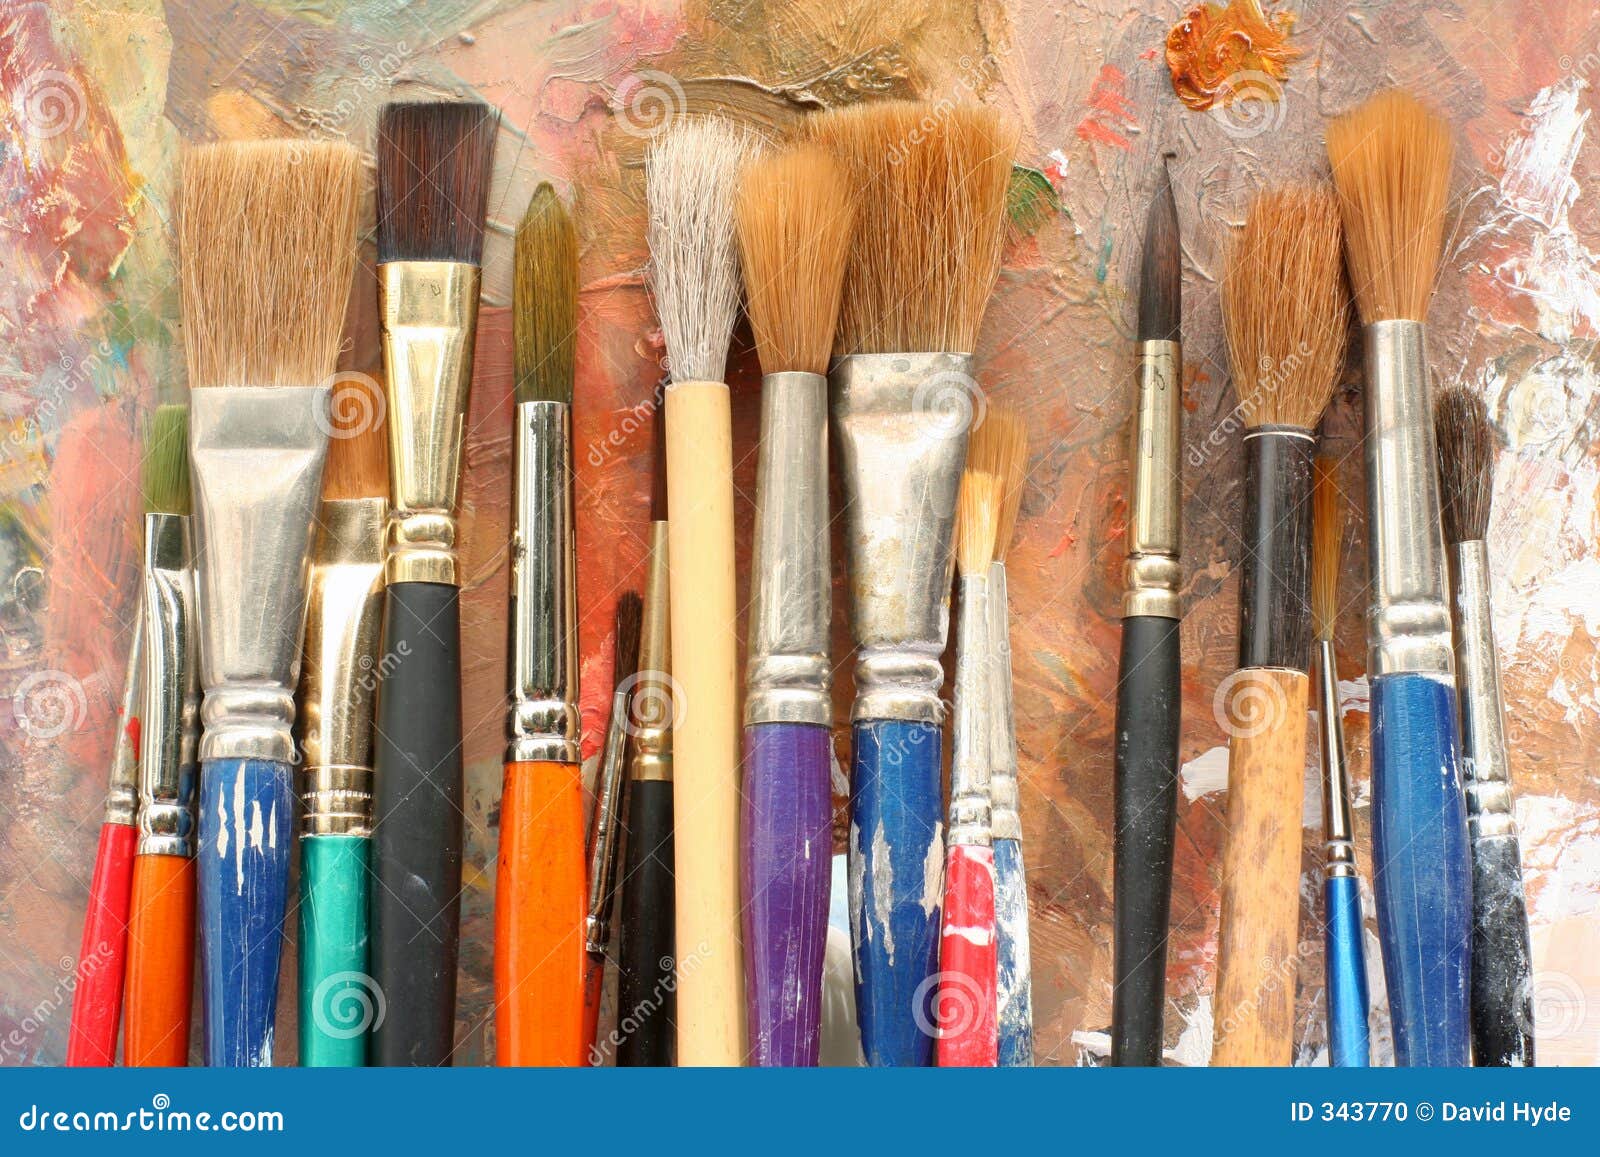 StudioArt Palette And Brushes 04 Stock Photo - Image of ...